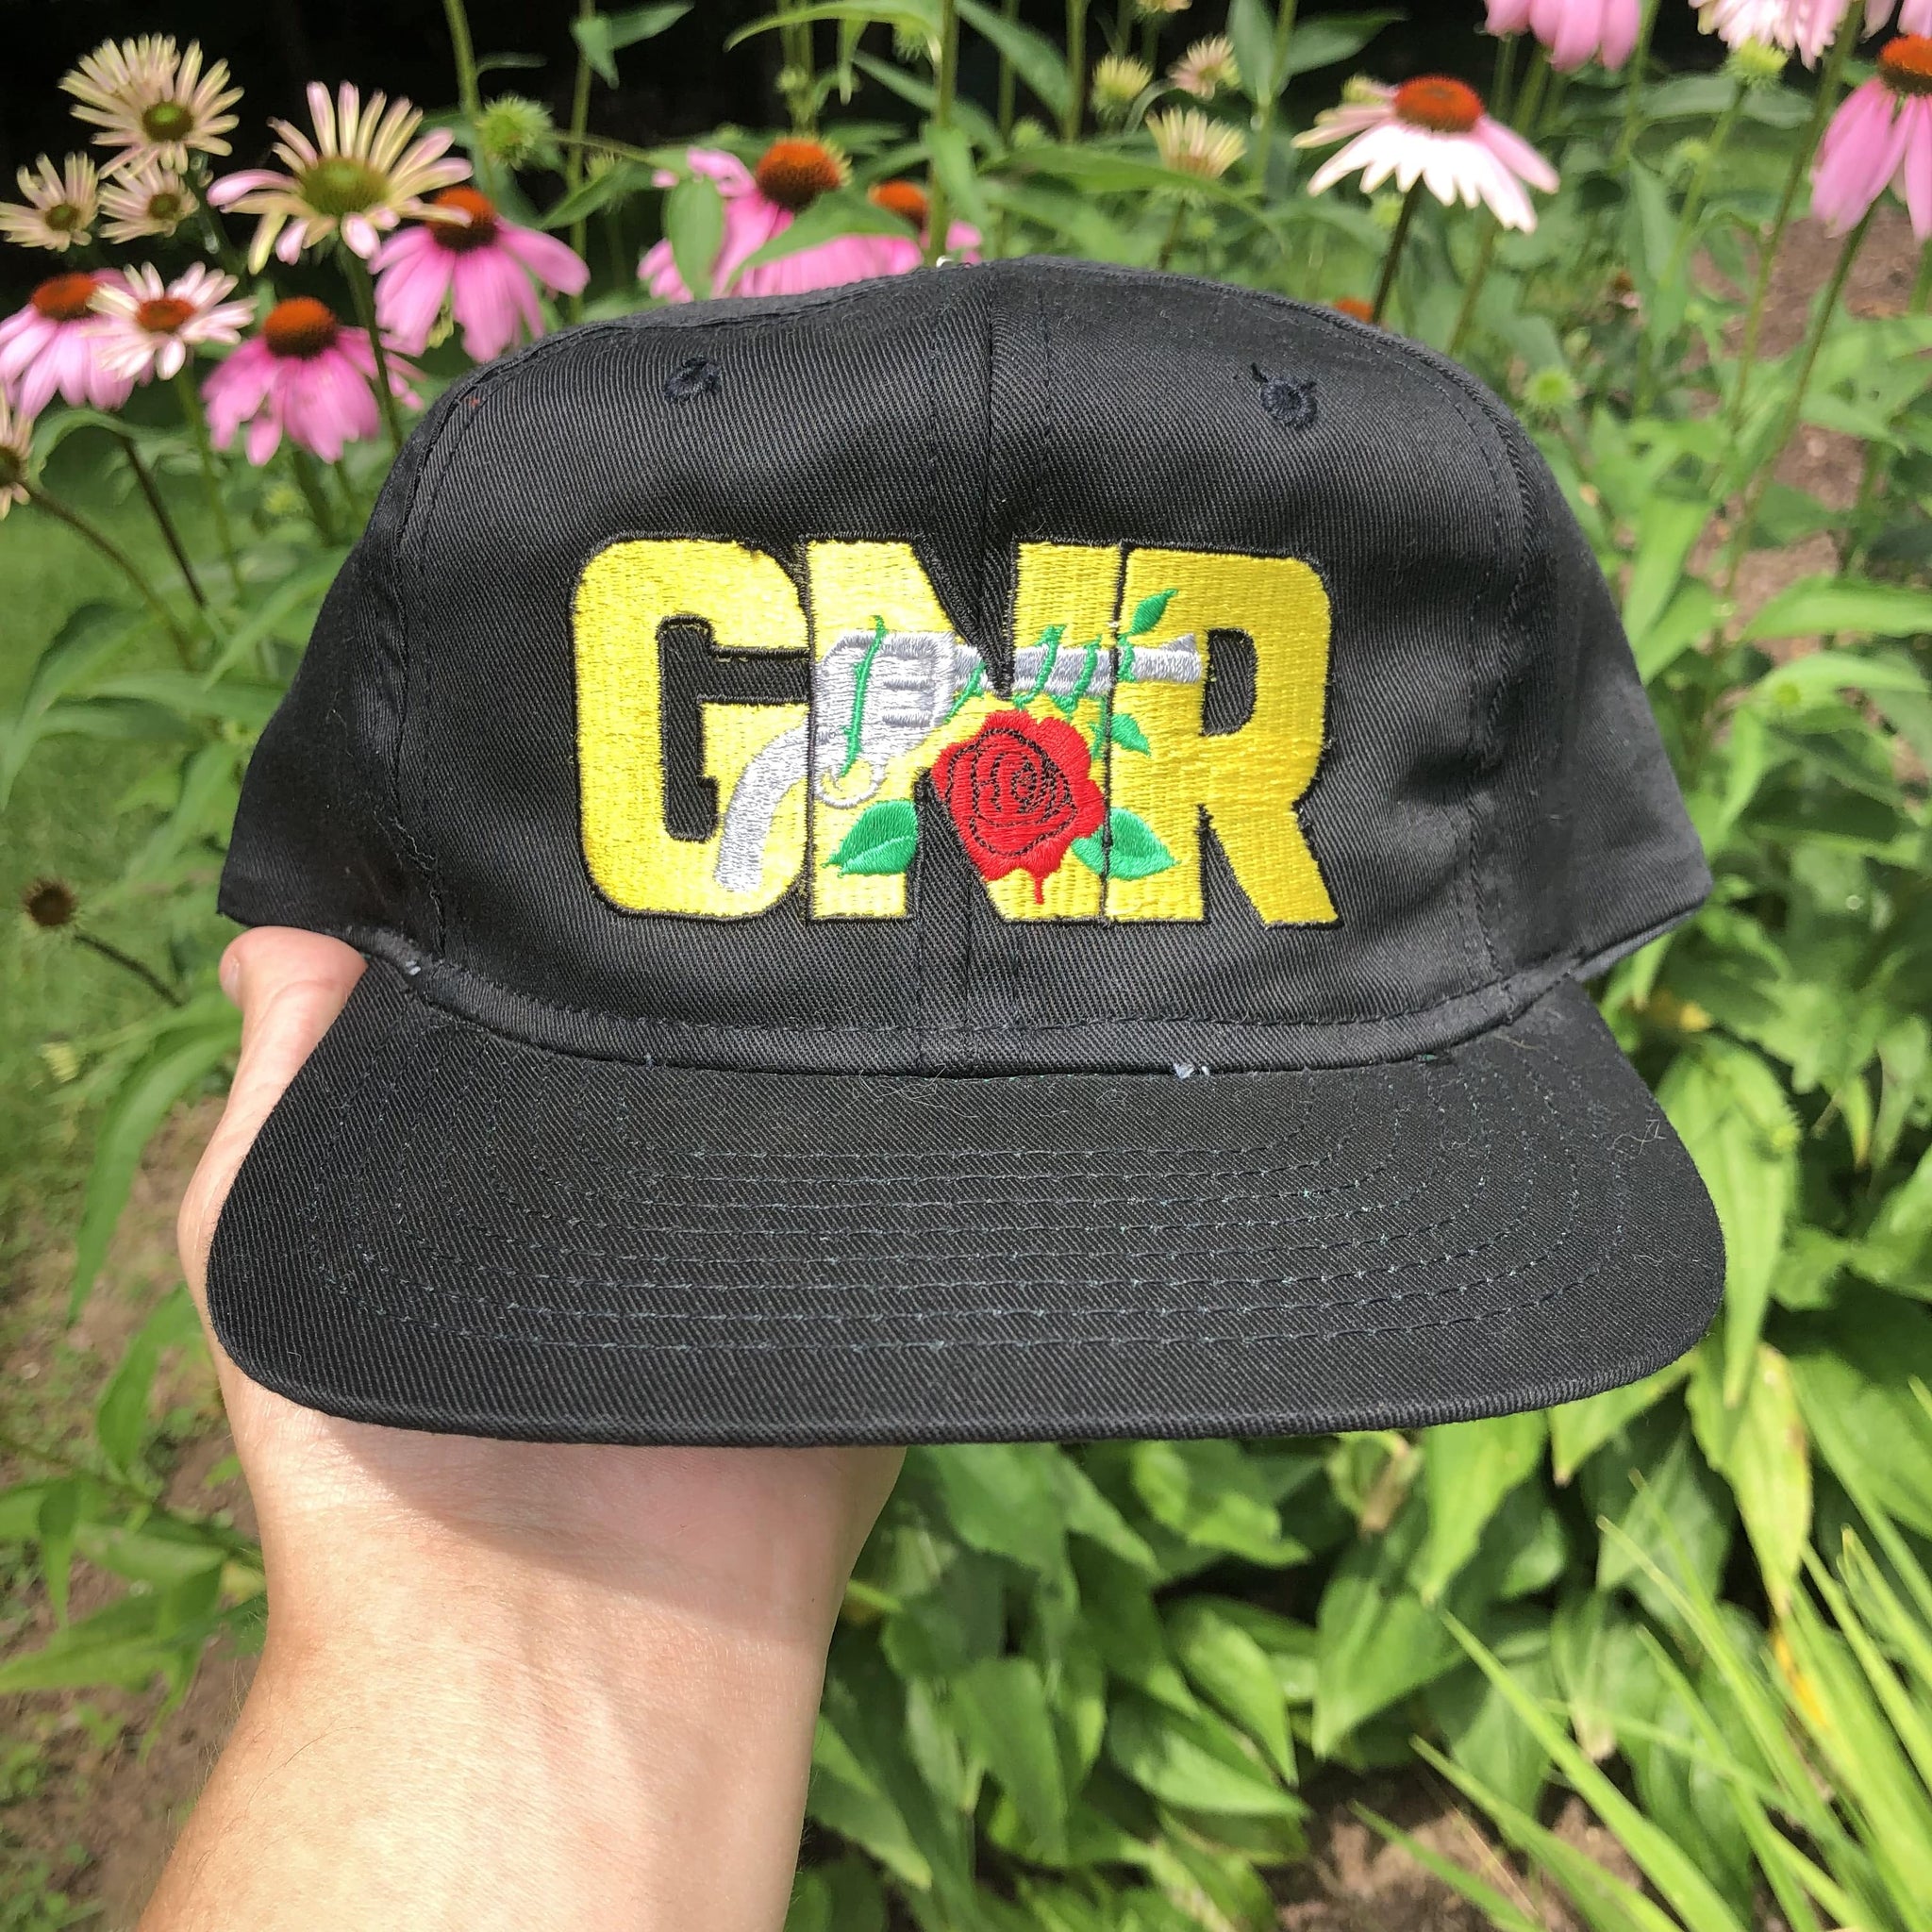 Vintage 1992 Guns N’ Roses Tokyo Dome Snapback Hat